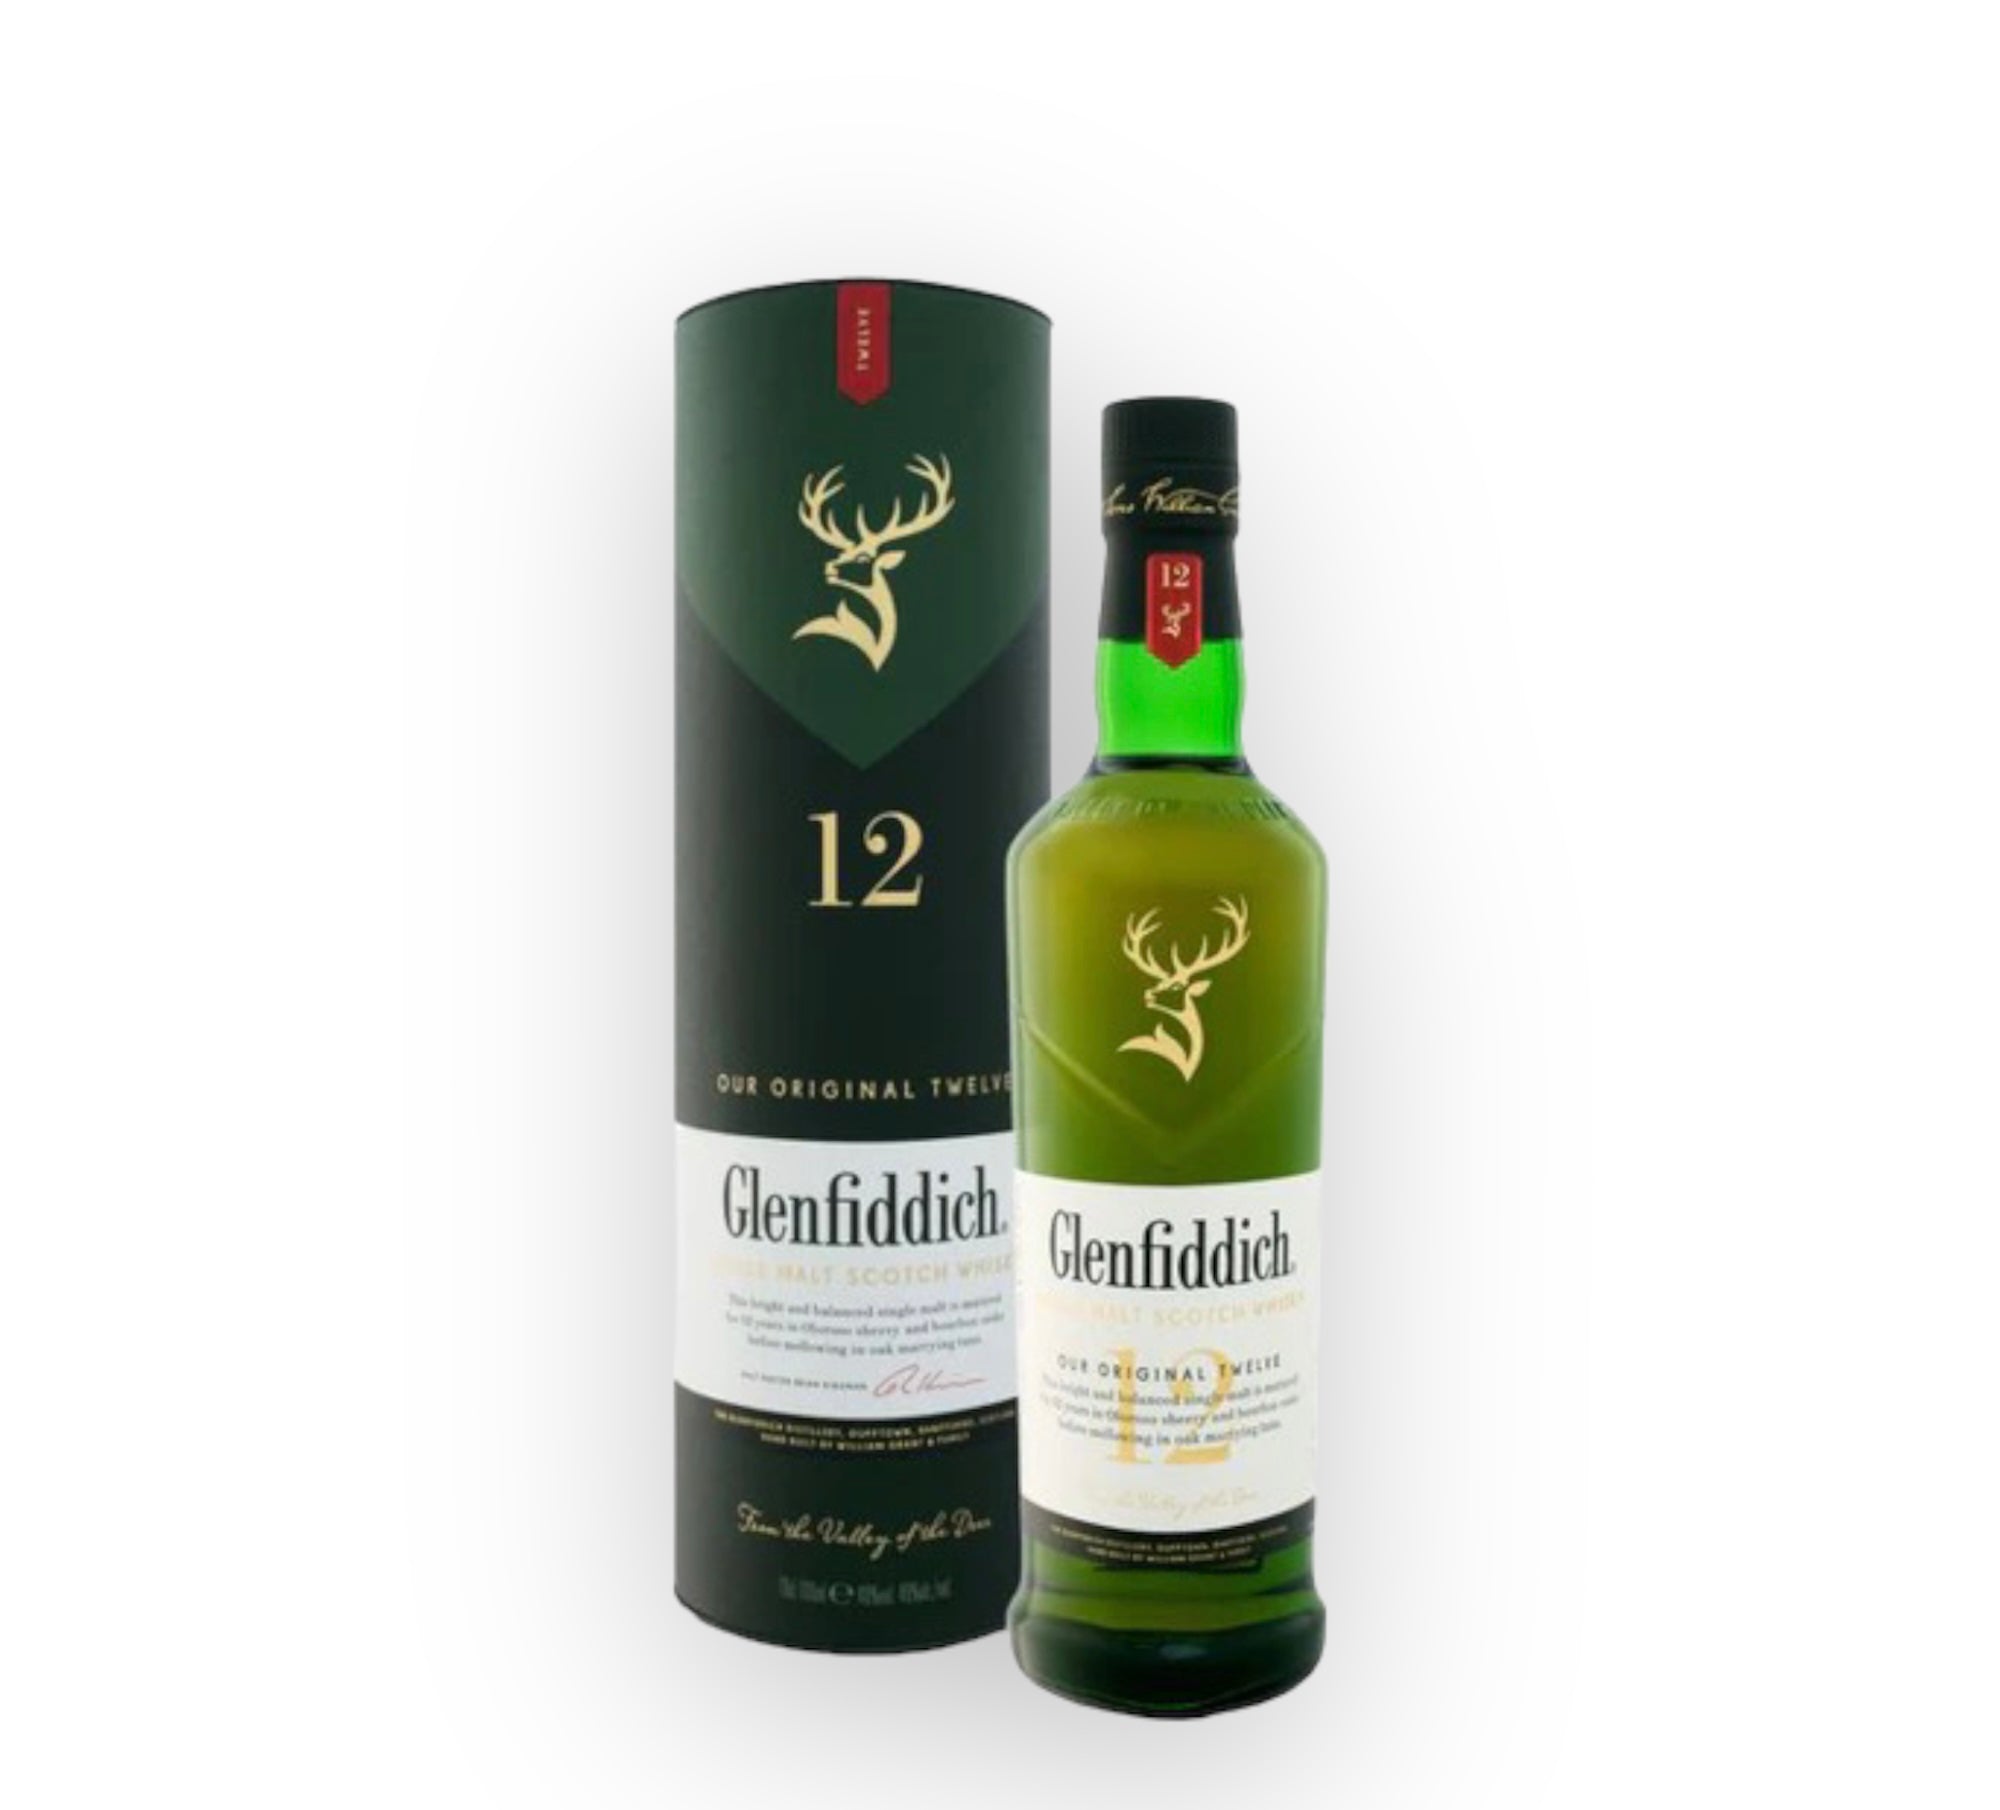 Glenfiddich 12 Year Old Single Malt Scotch Whisky 0,7l